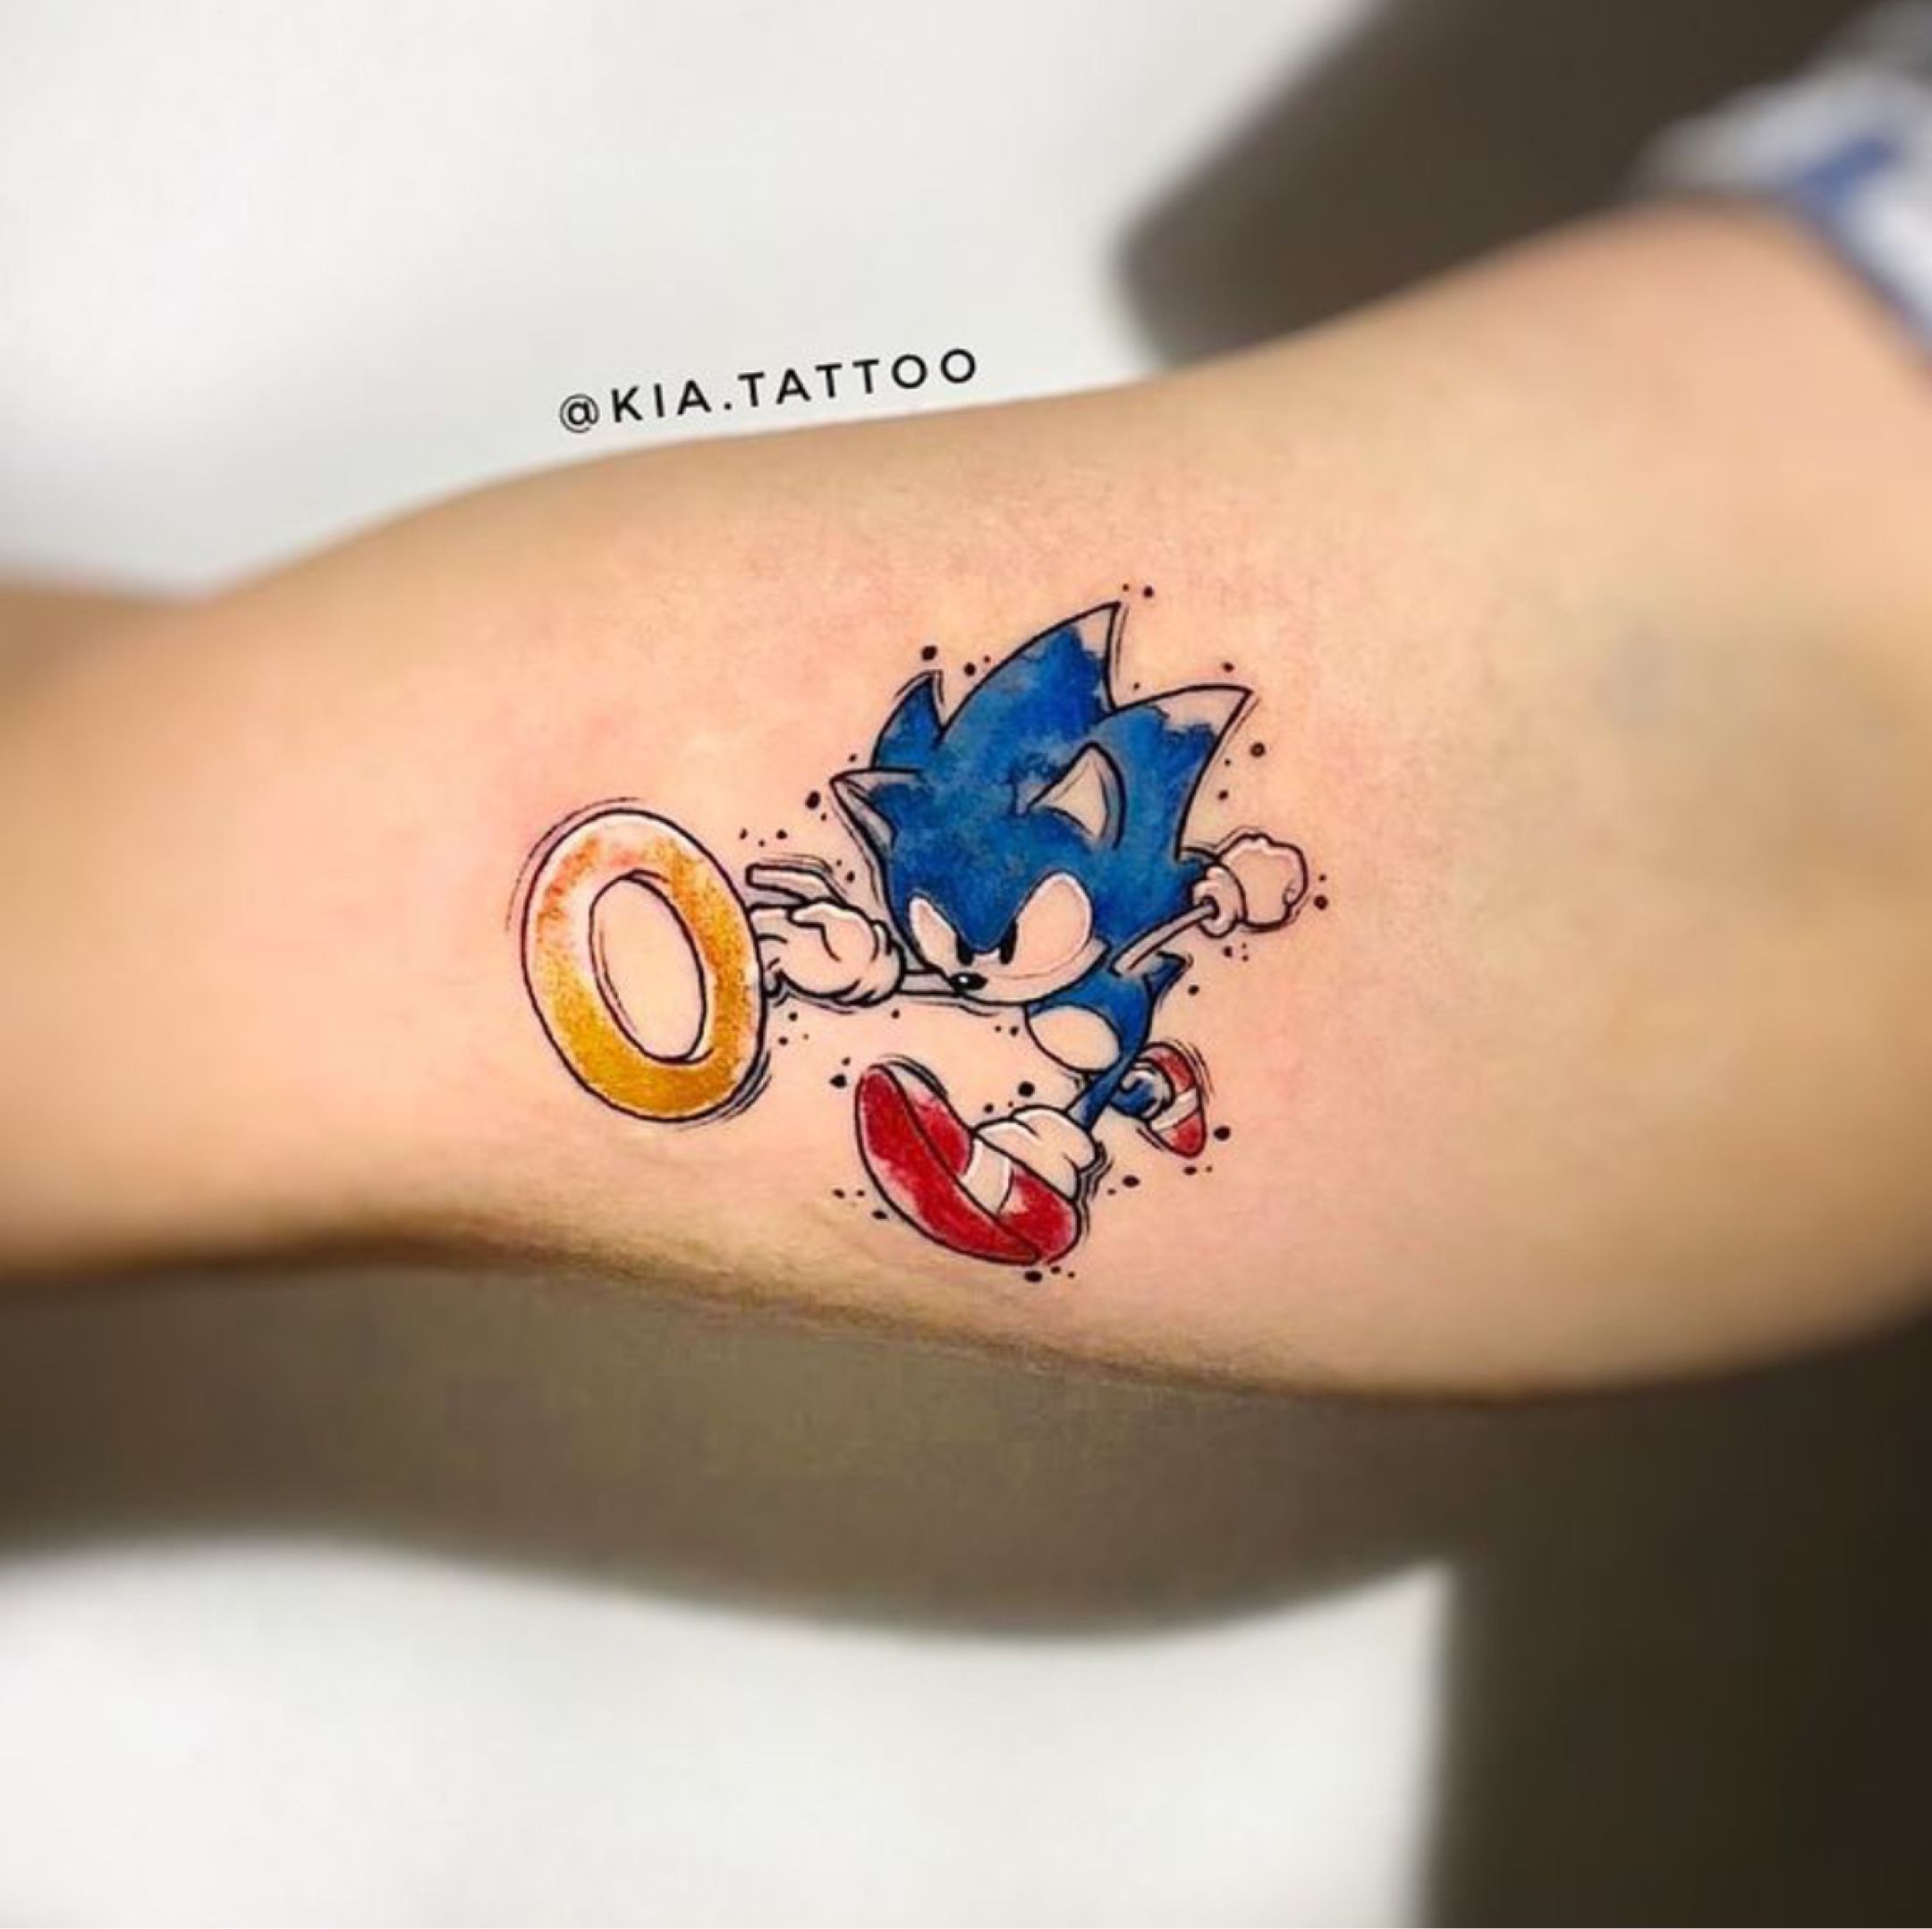 wanderkell on Twitter Made a lineart соmissiоn for tattoo sonic  SonicTheHedgehog sonicfanartist sonicfanart httpstcoxJ3r7ouCTd   Twitter